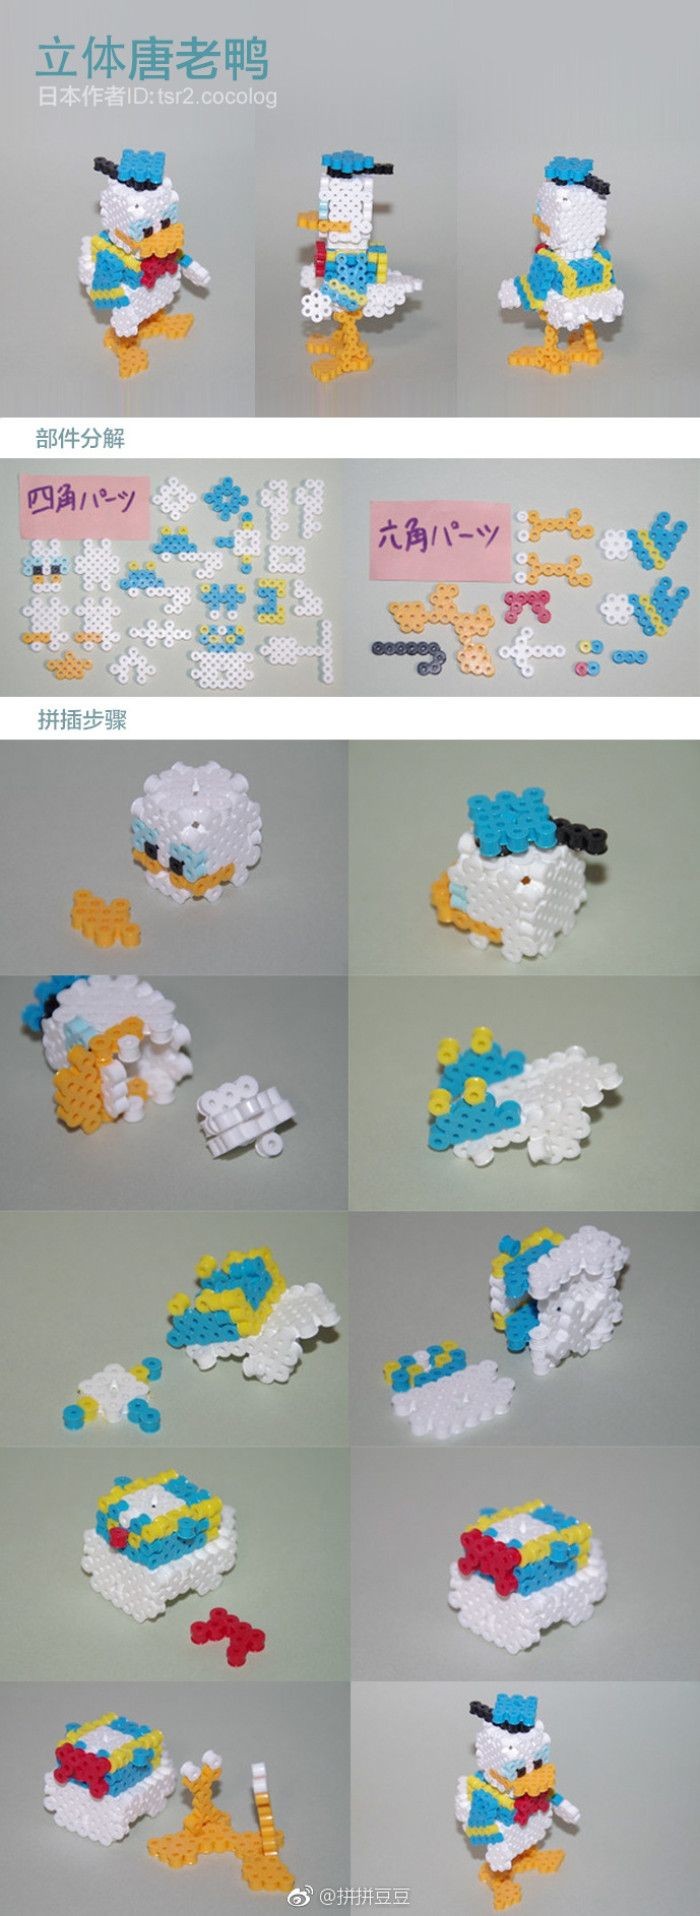 Pixelcraft Papercraft 35 Best Perler Bead Patterns Images On Pinterest